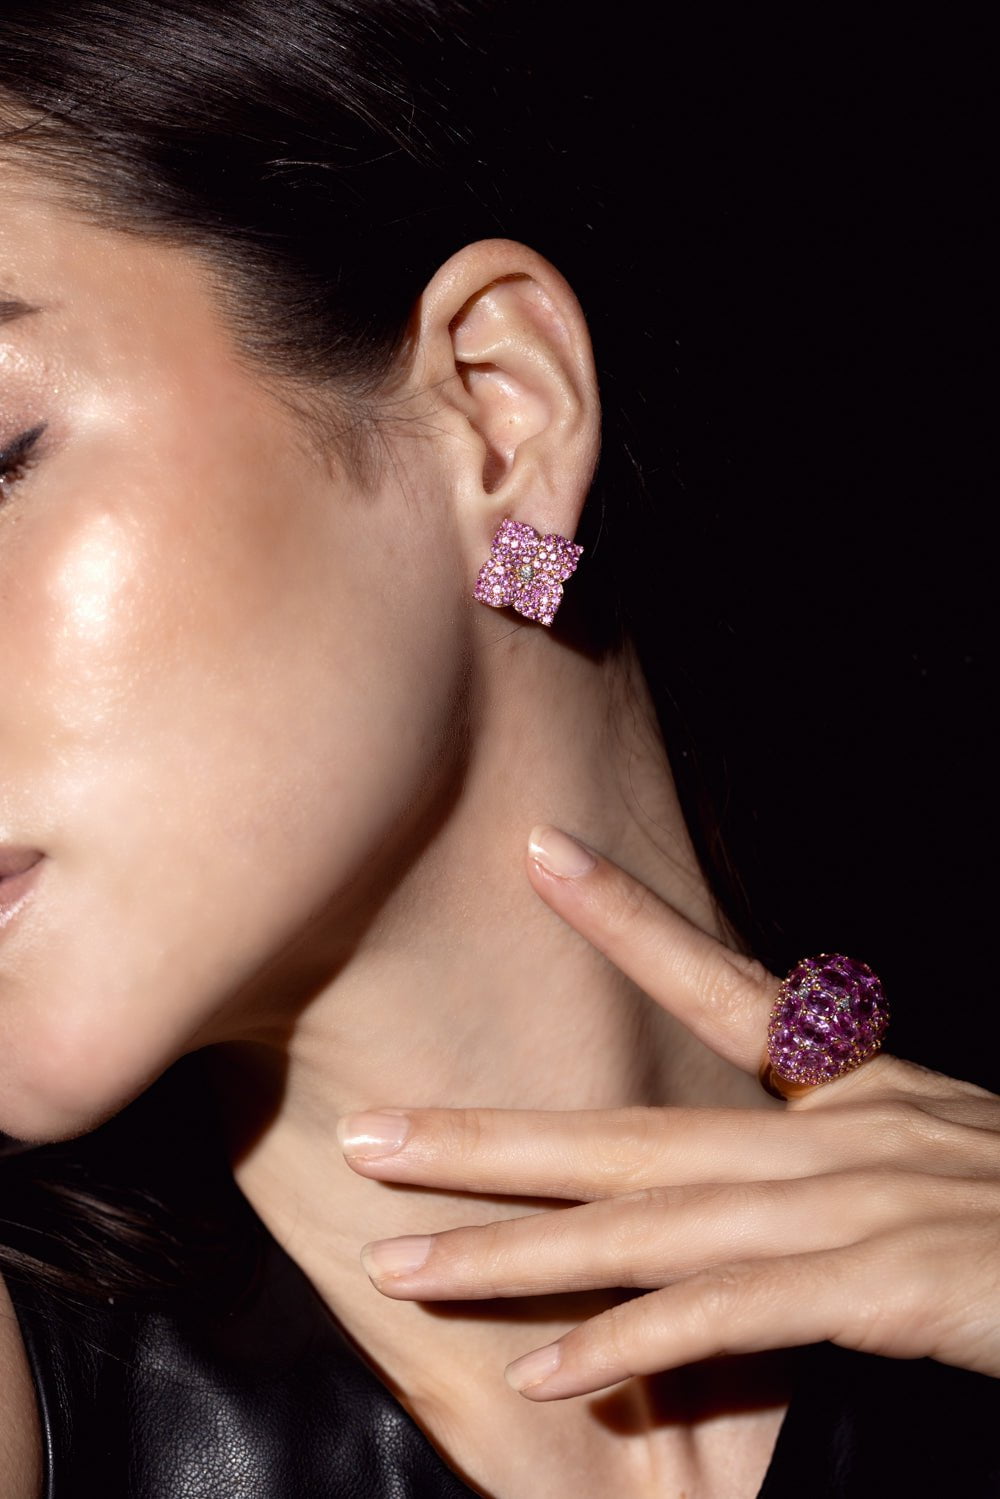 PIRANESI-Pink Sapphire Small Mosaique Flower Earrings-PINKGOLD